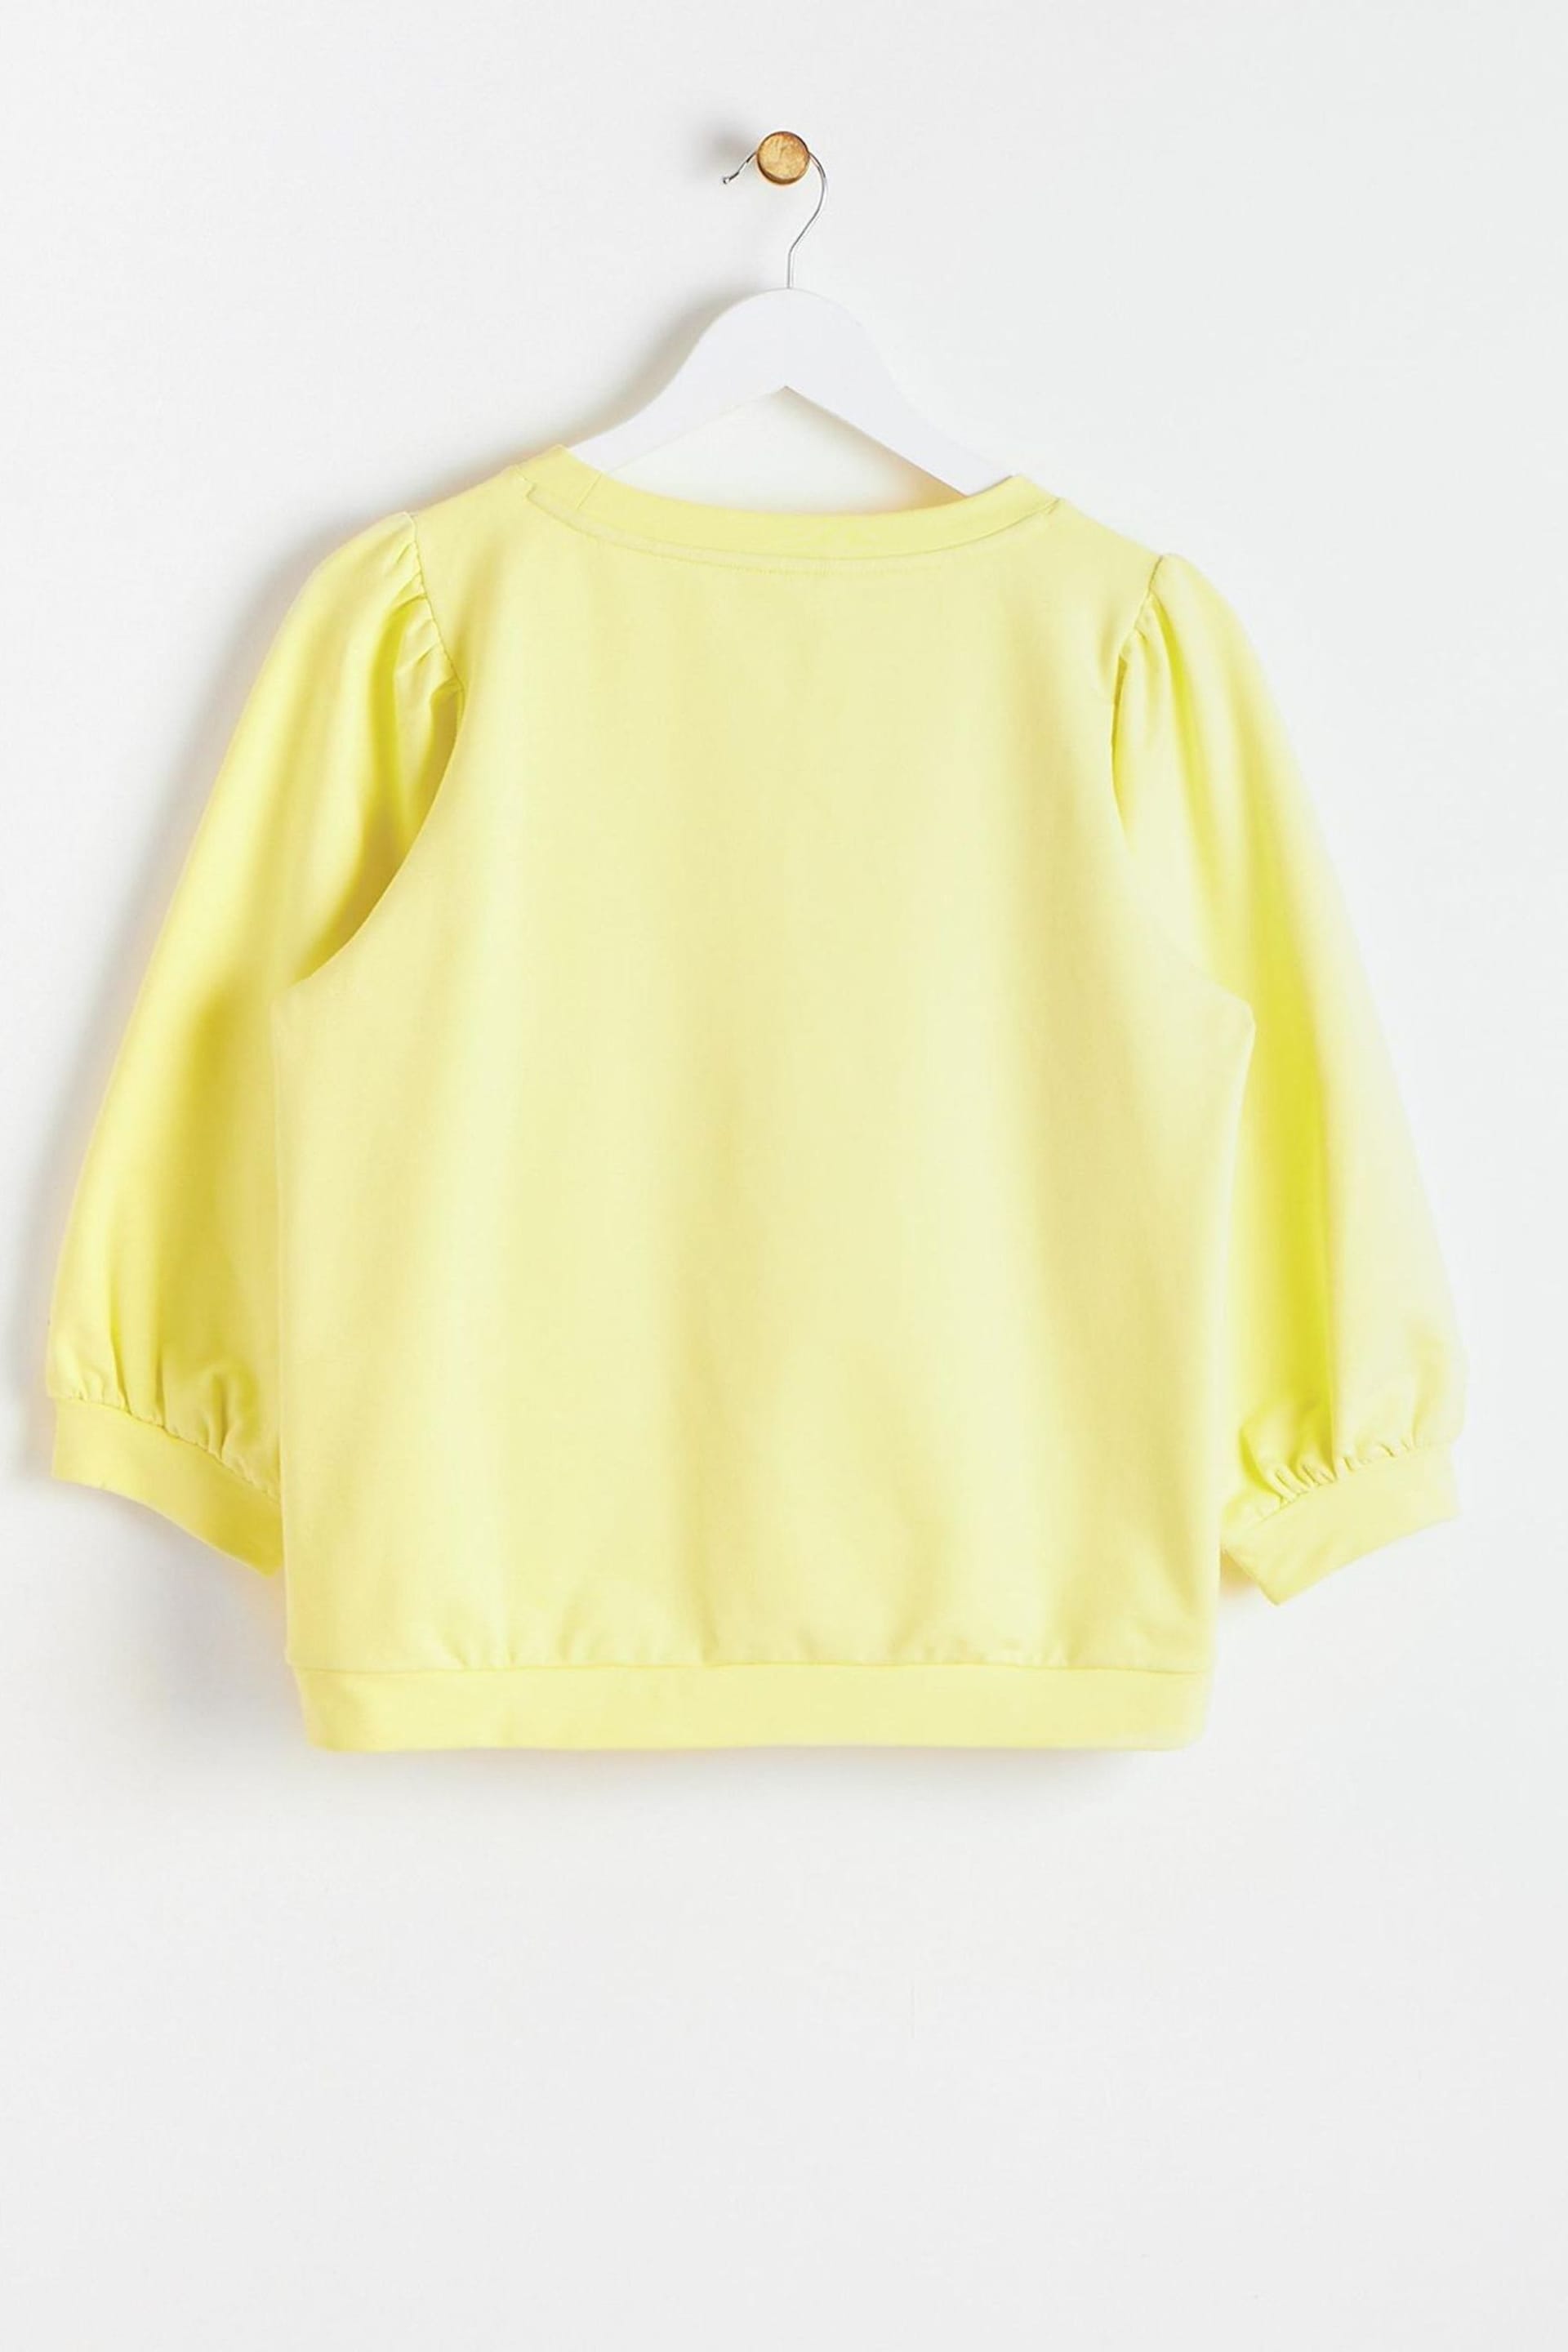 Oliver Bonas Yellow Puff Sleeve Pleated Sweatshirt - Image 2 of 5